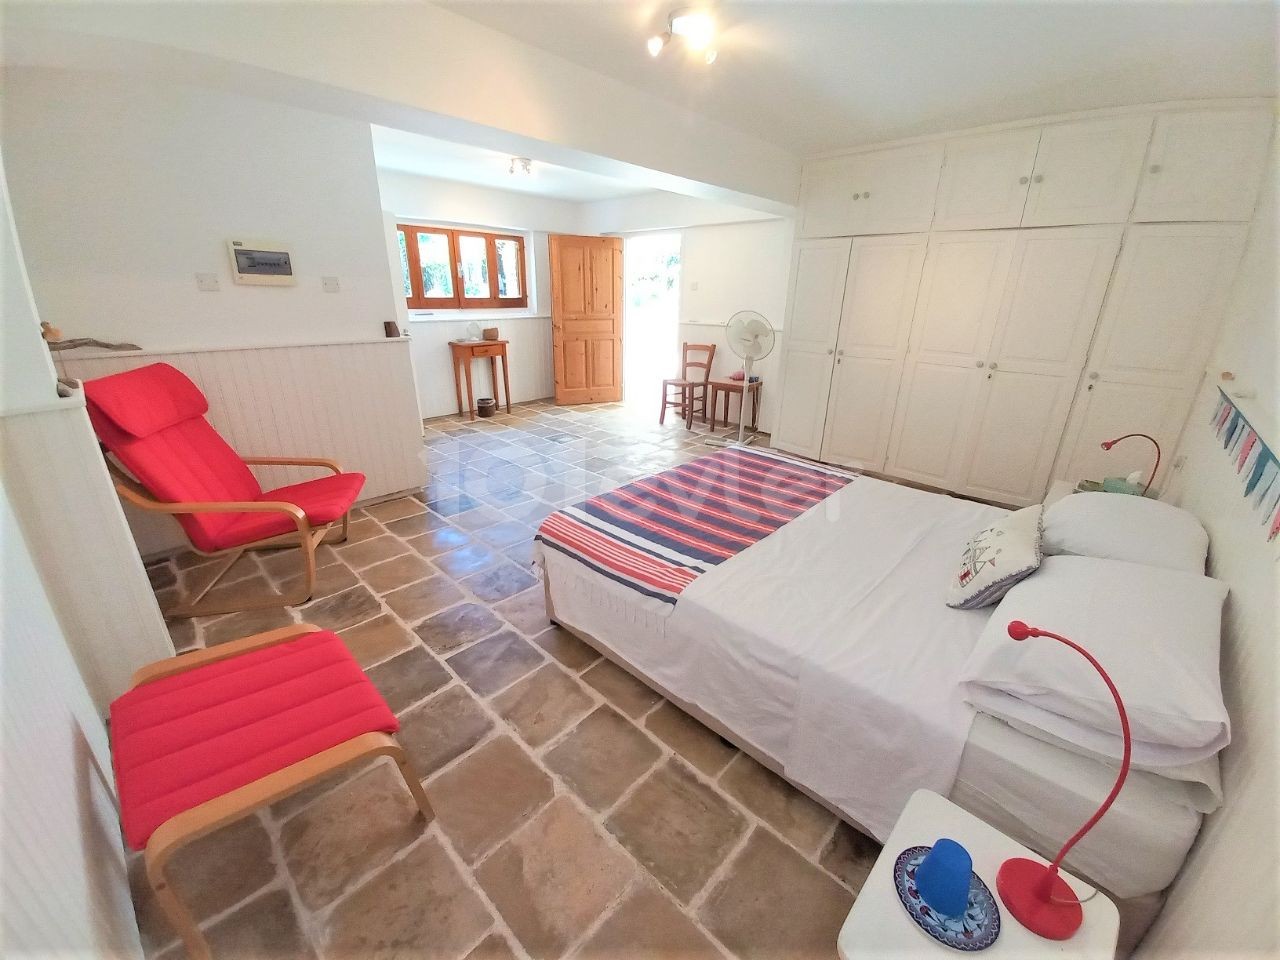 5 Bedroom Villa in Central Kyrenia - Pre-74 British Title Deed!